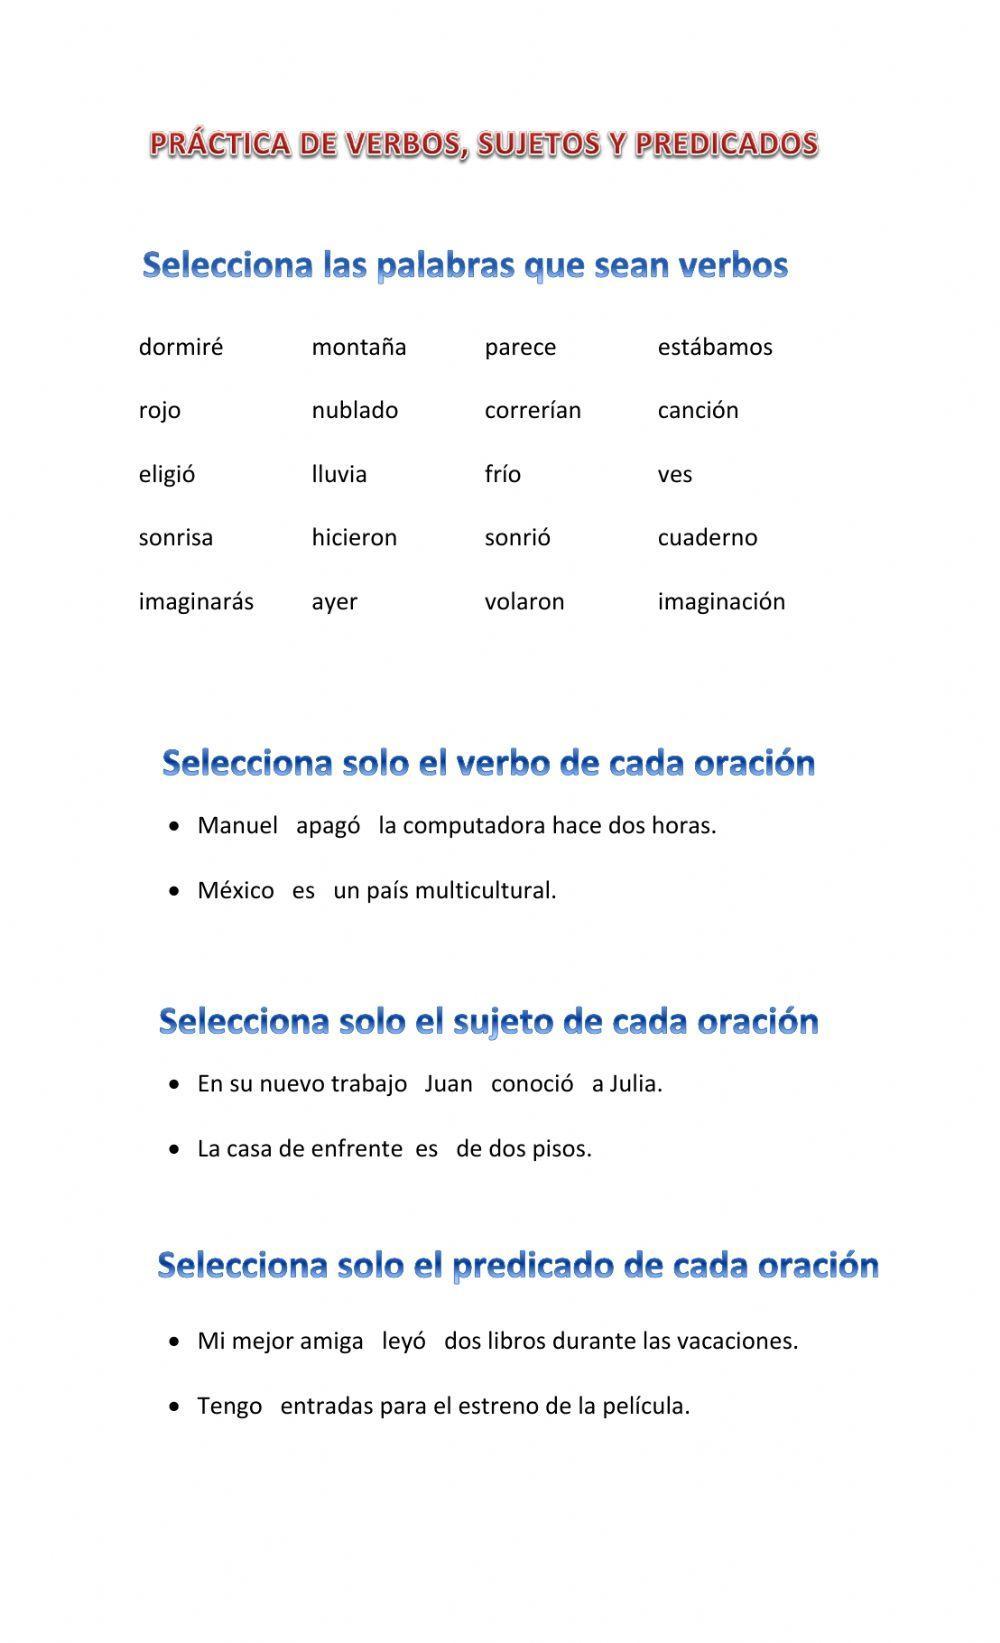 Sujeto, verbo y predicado worksheet | Live Worksheets